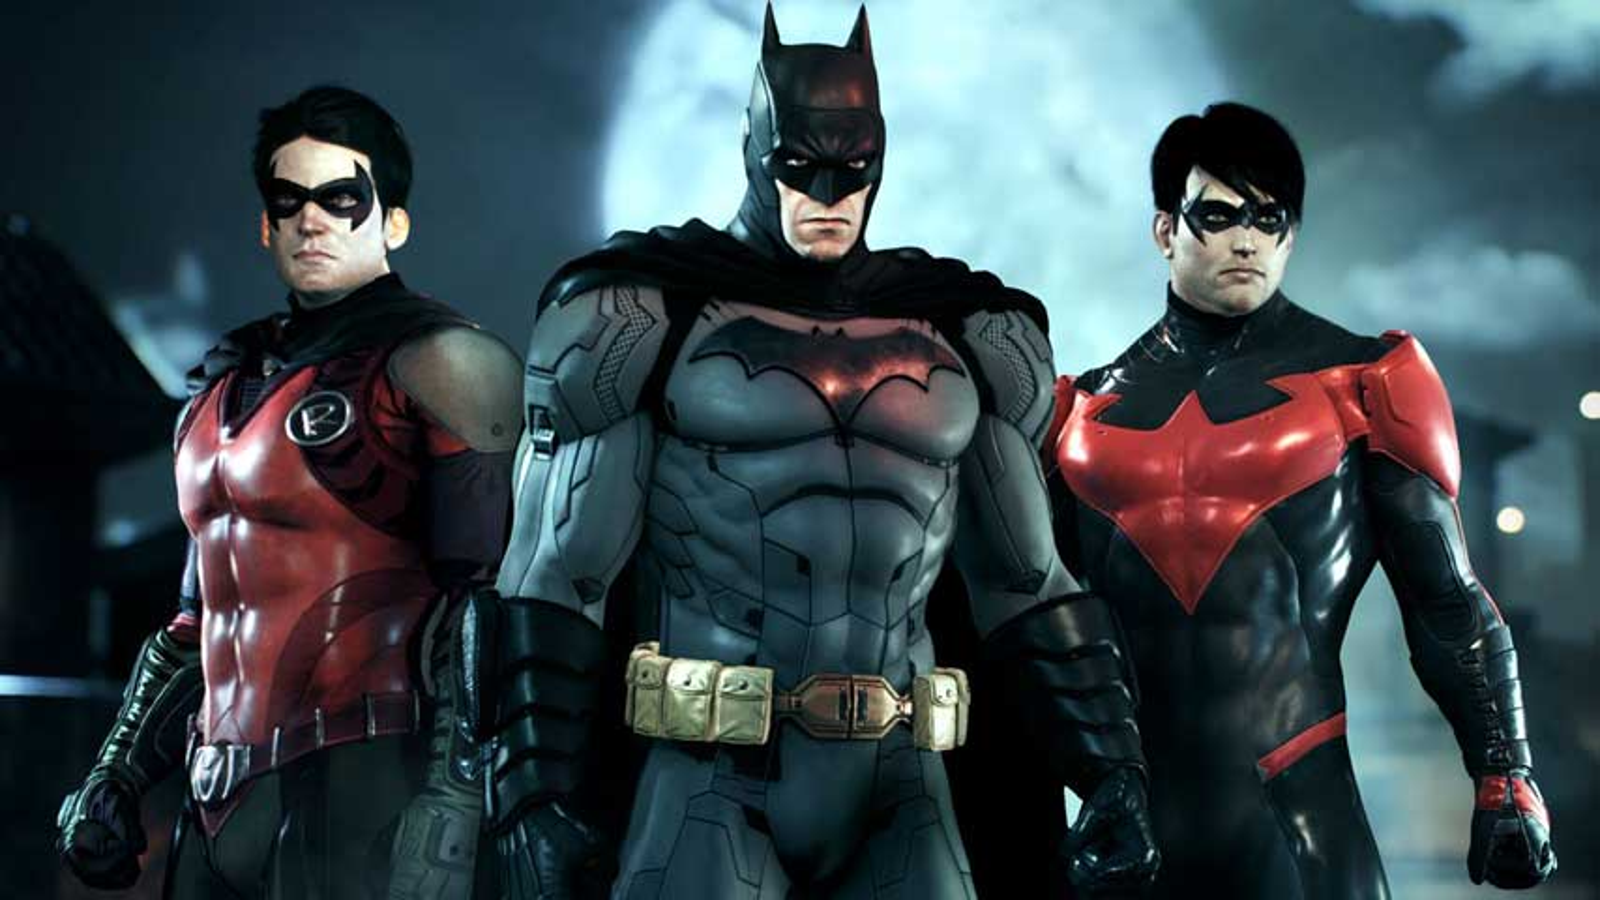 Batman: Arkham Knight mod makes everyone playable | VG247